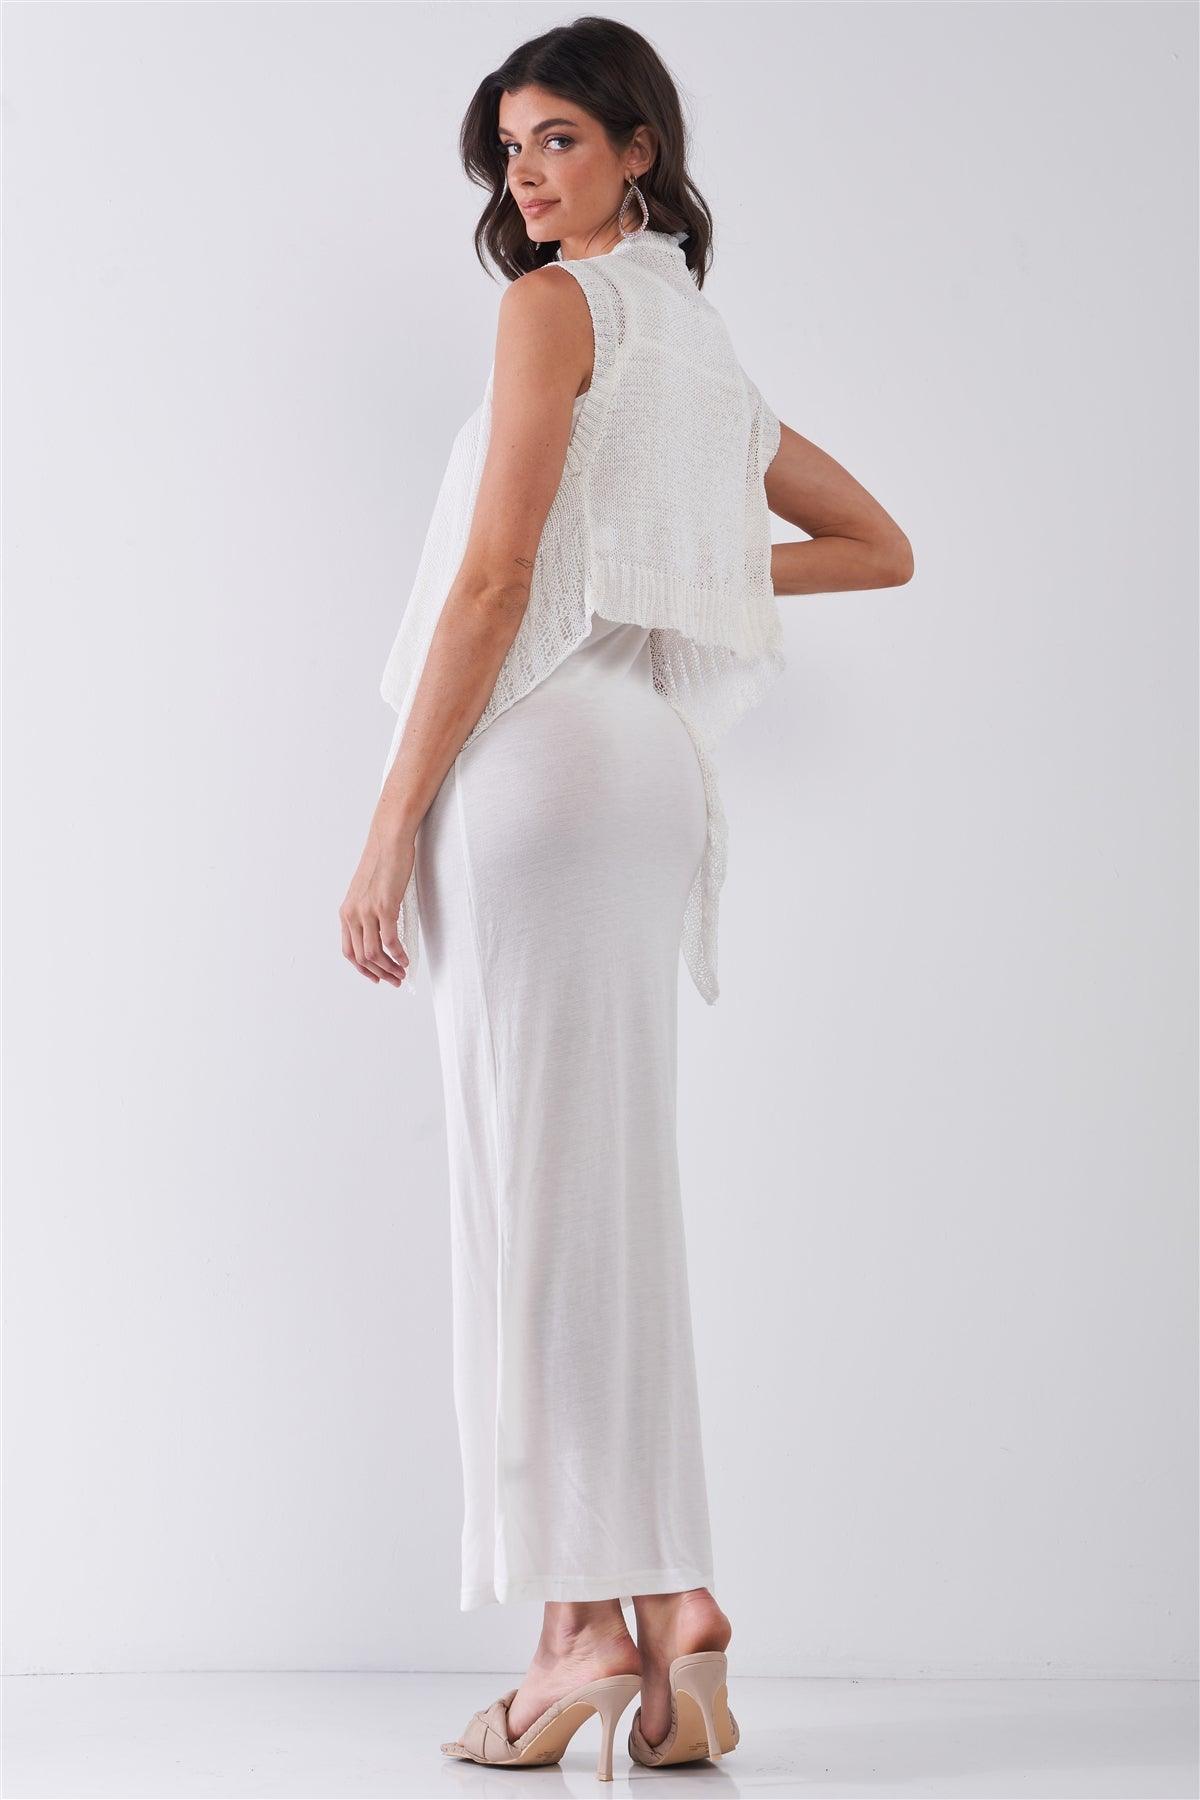 Boho White Maxi Dress With Crochet Sleeveless Poncho